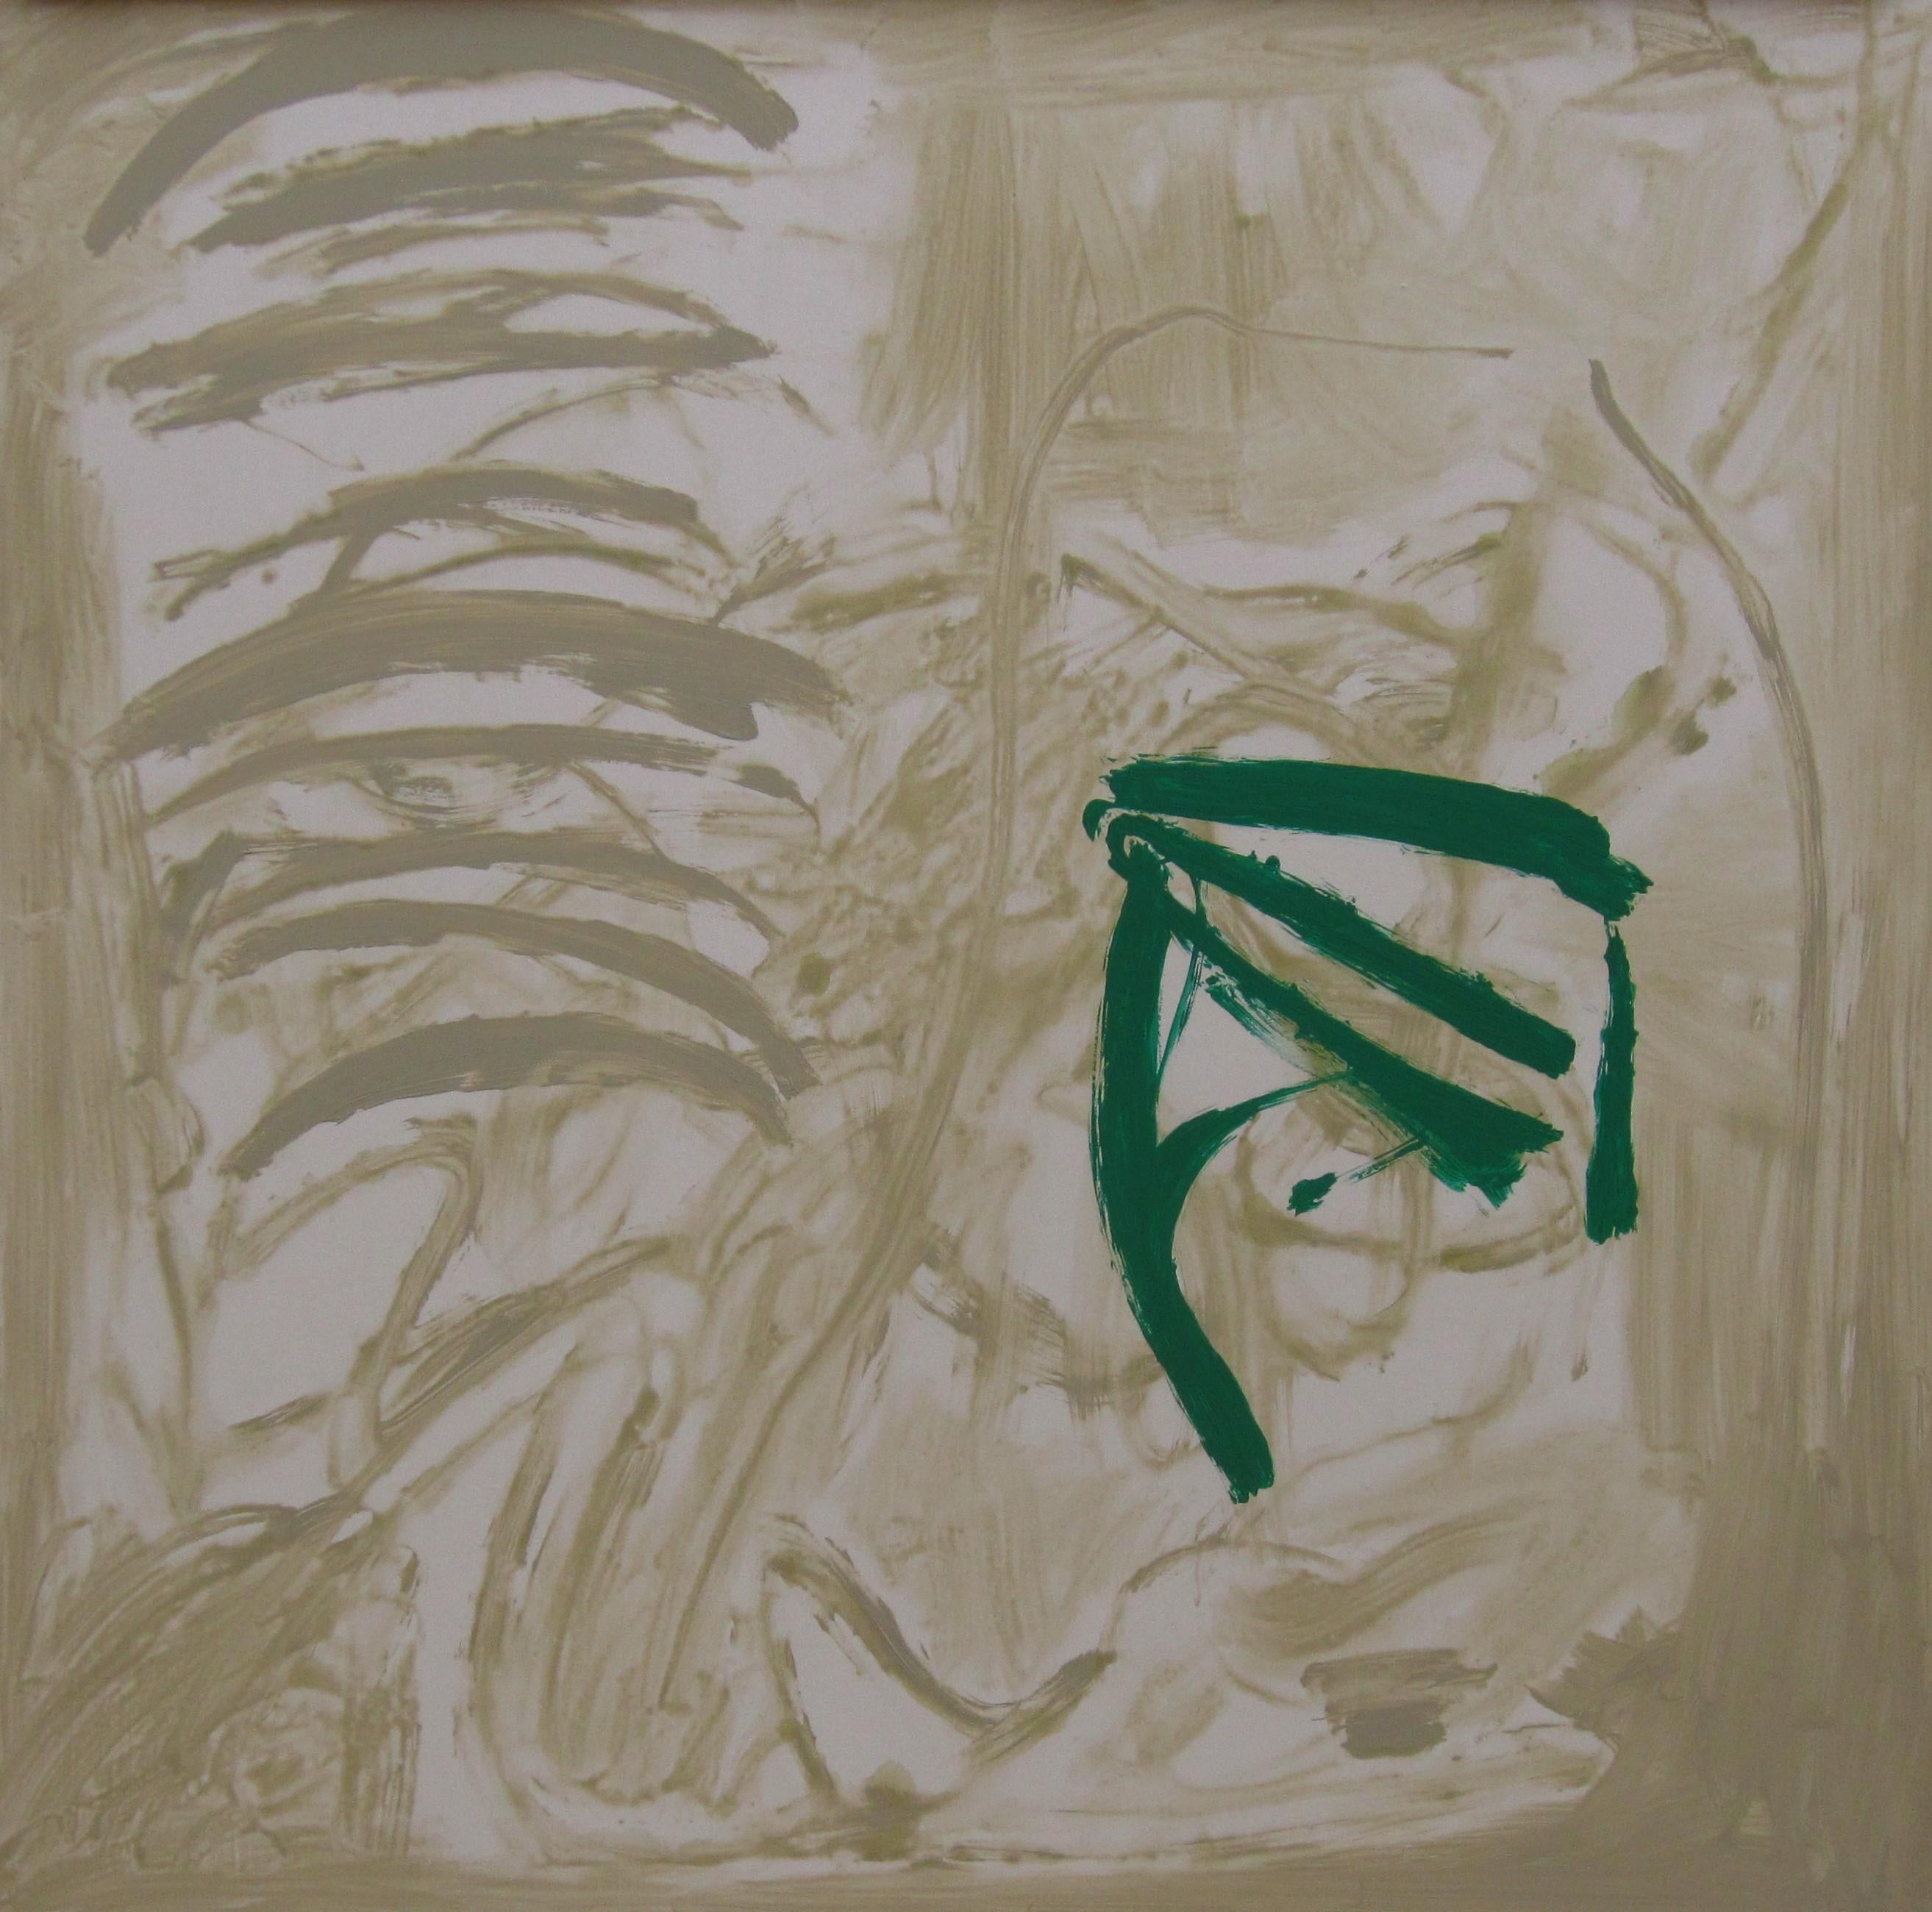 RAFAEL RUZ Abstract Painting - Ruz  Square  Big  Green  Placidez  original abstract acrylic canvas painting